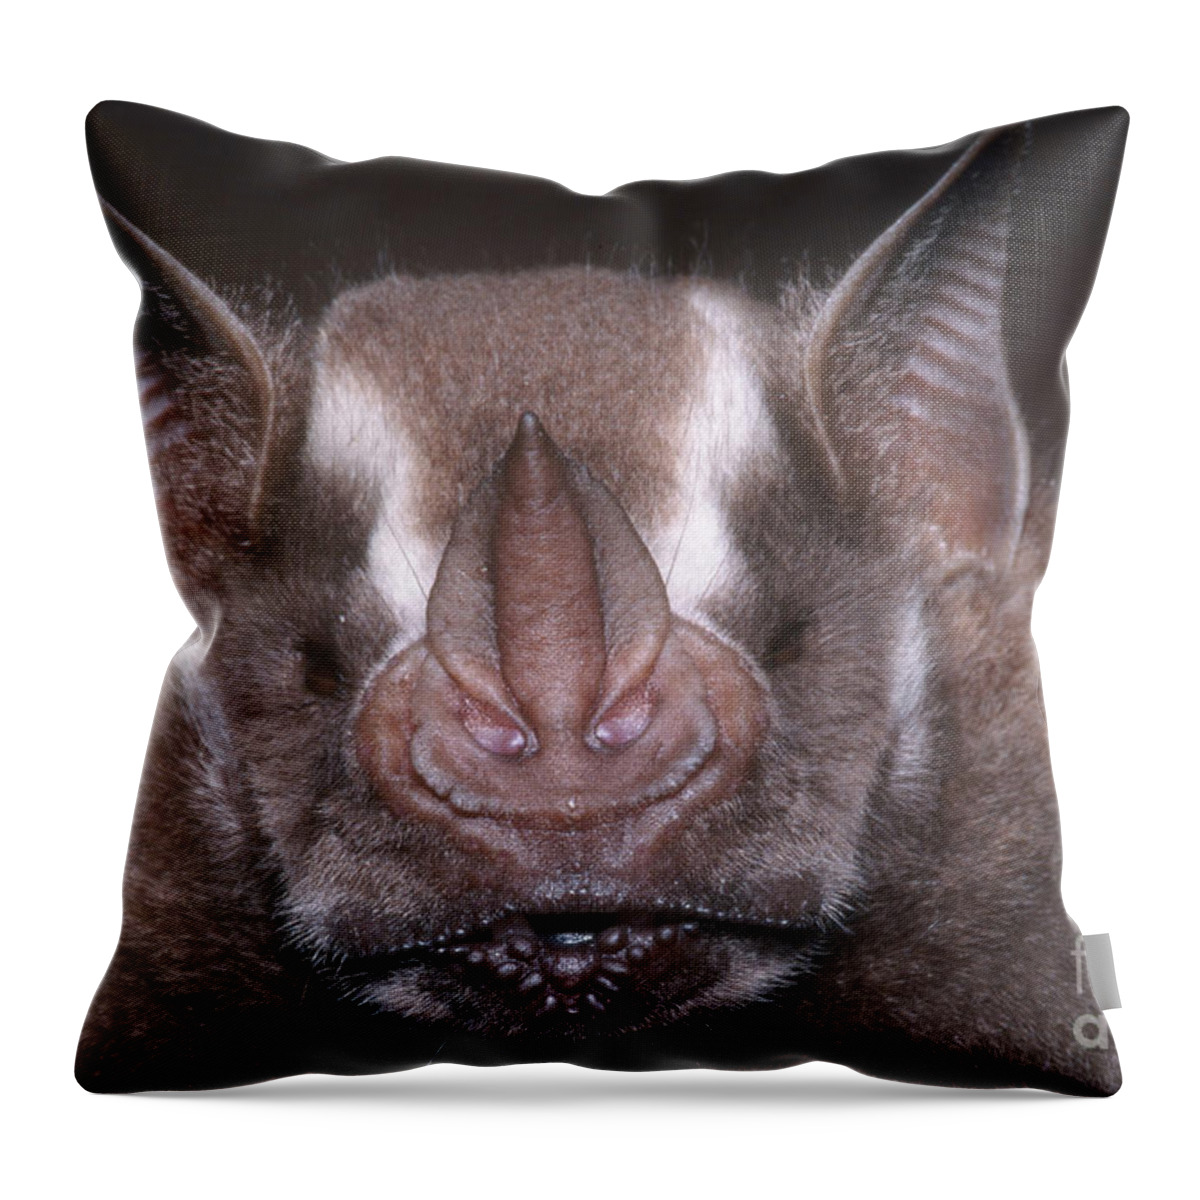 Jamaican Fruit Bat Throw Pillow featuring the photograph Jamaican Fruit Bat by Dante Fenolio